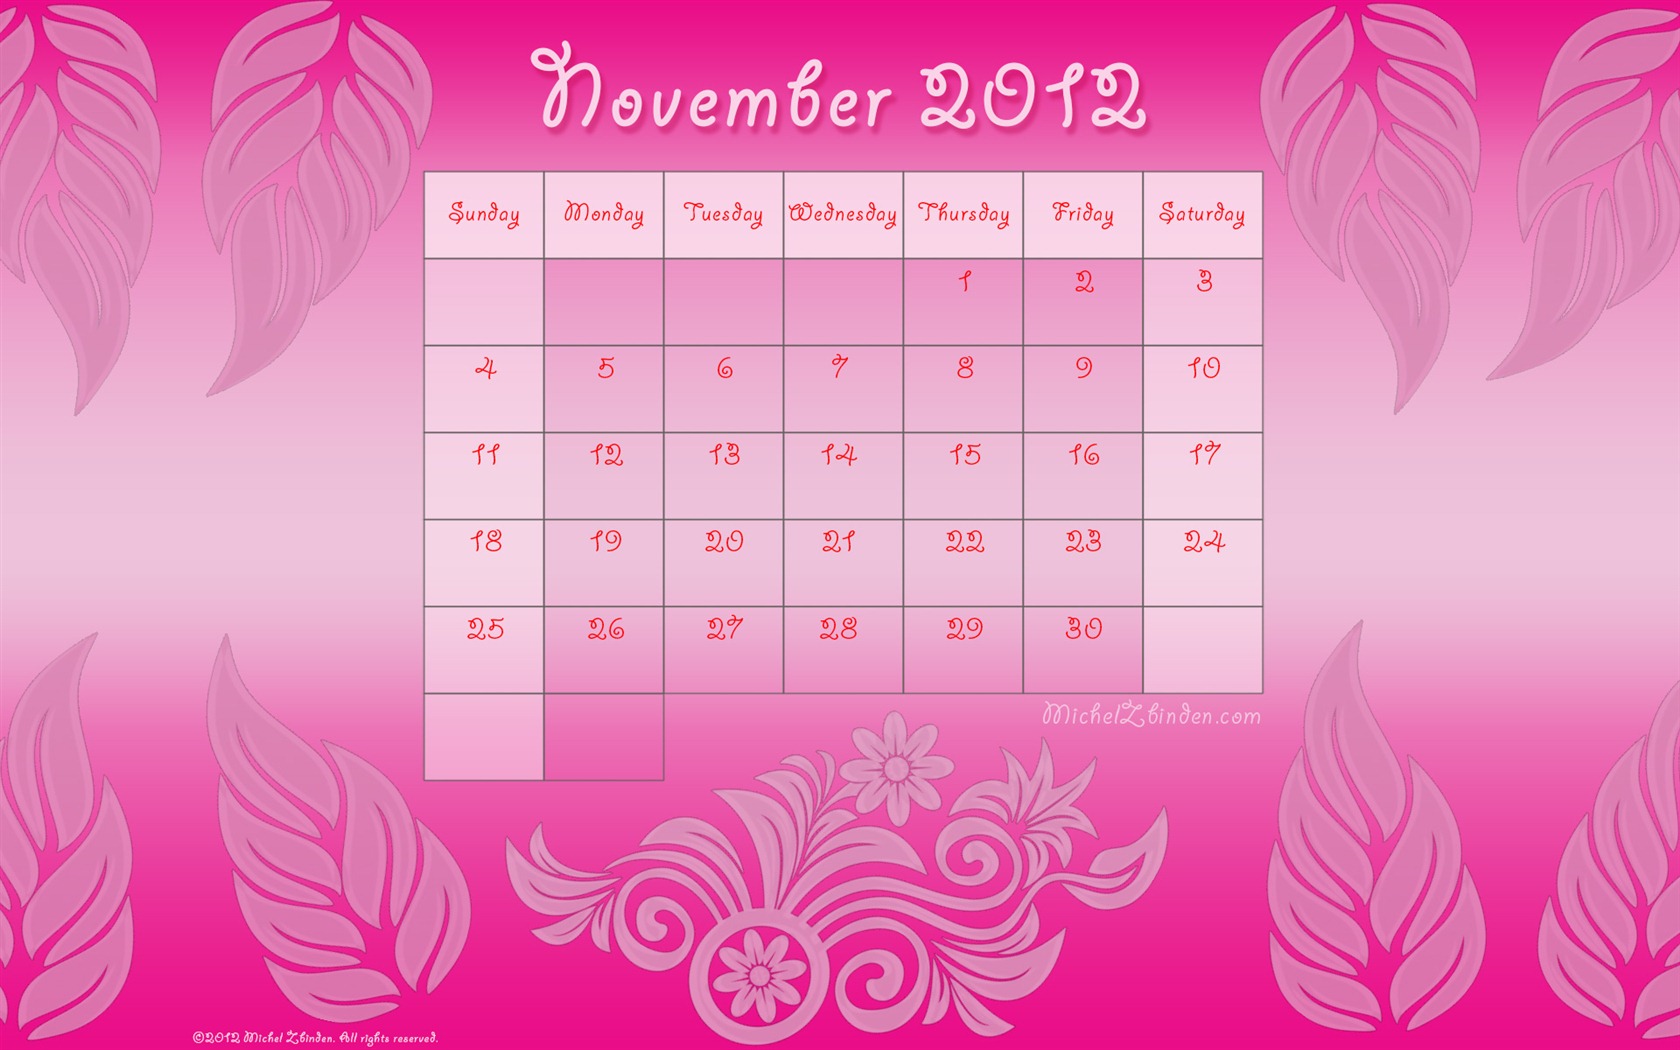 November 2012 Kalender Wallpaper (1) #3 - 1680x1050